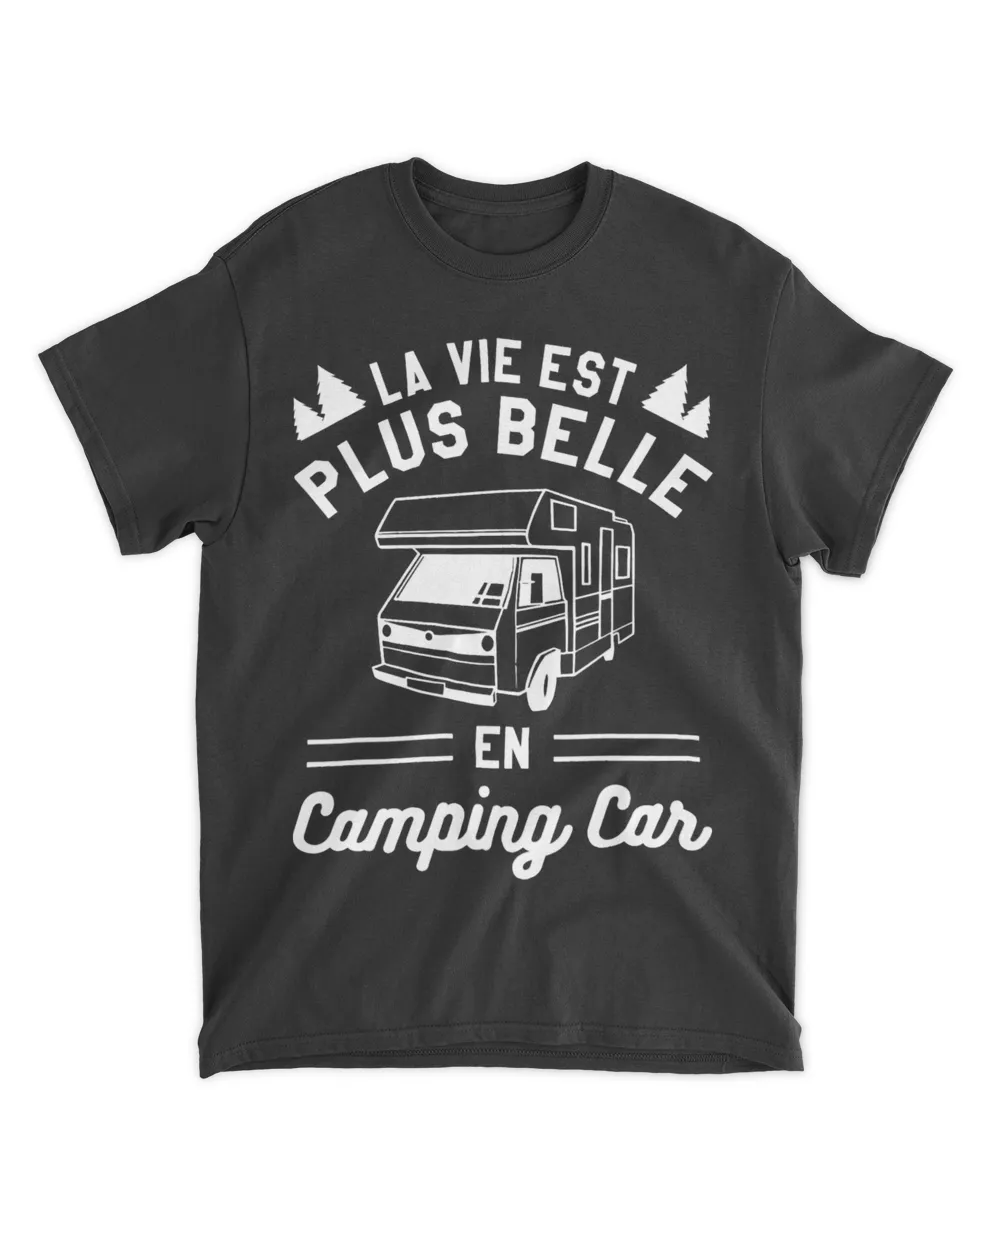 Camping Camp La Vie Est Plus Belle En Camper Van Camper